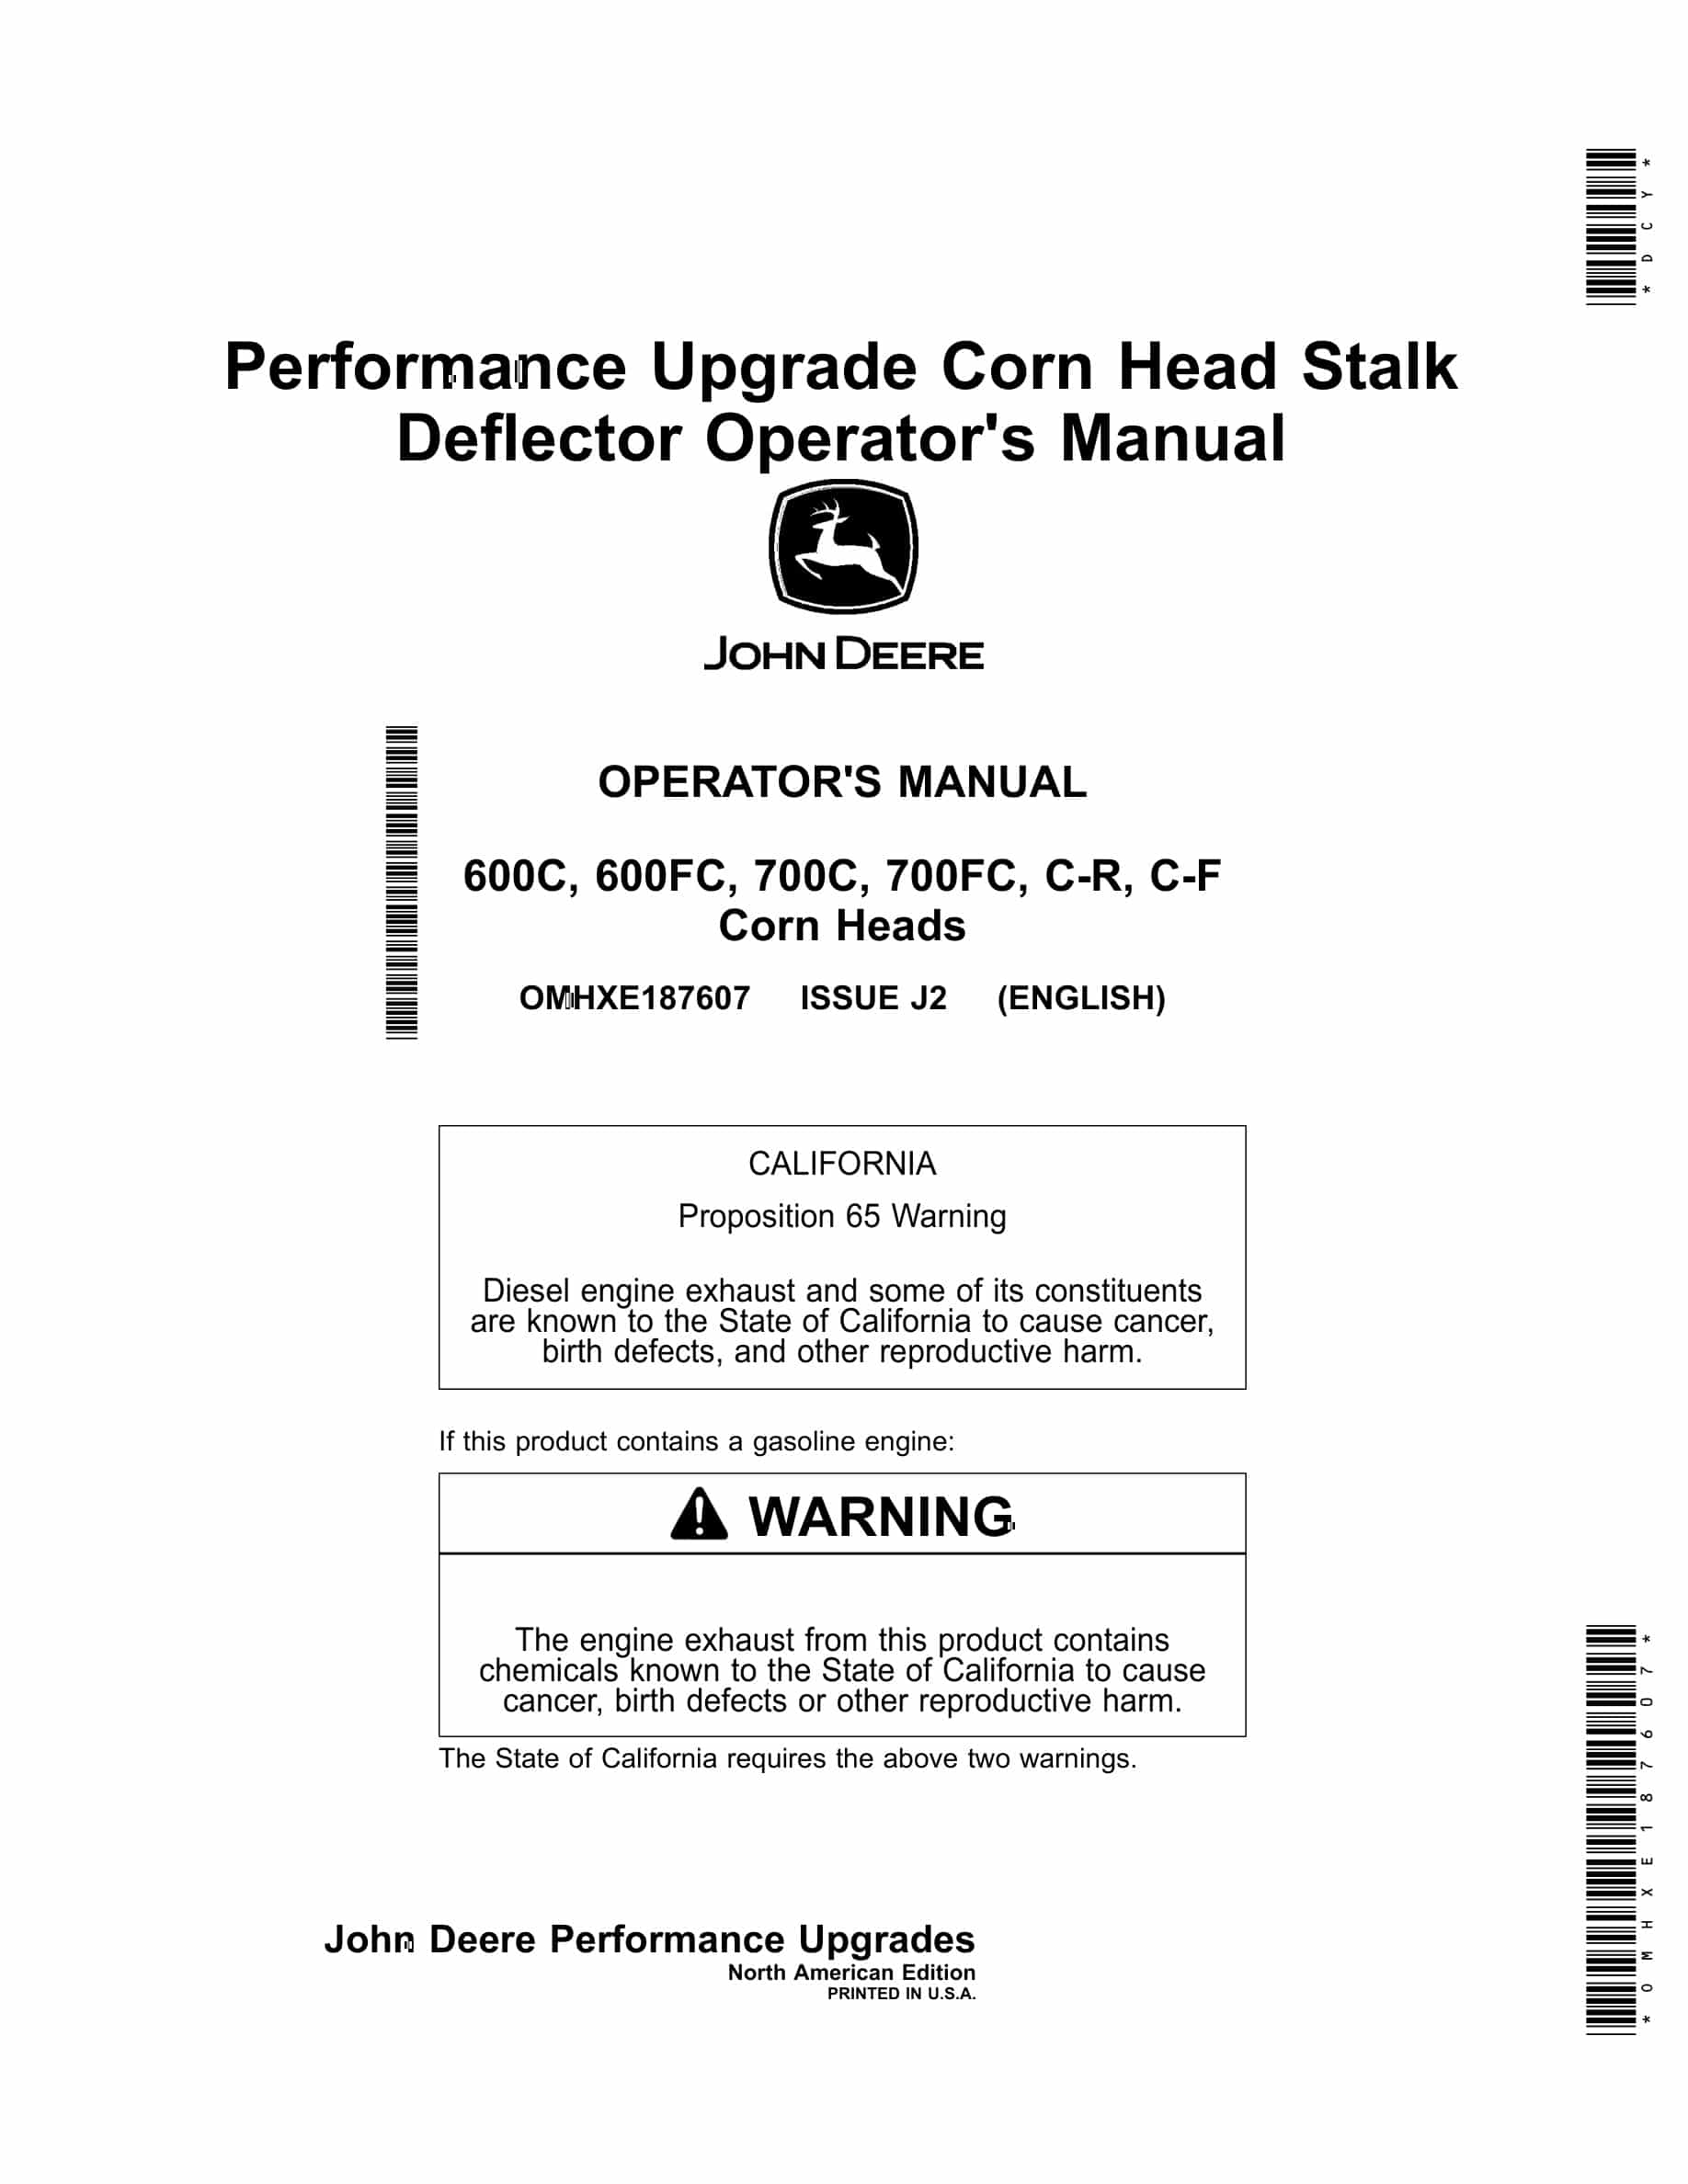 John Deere 600C, 600FC, 700C, 700FC, C-R, C-F Corn Heads Operator Manual OMHXE187607-1